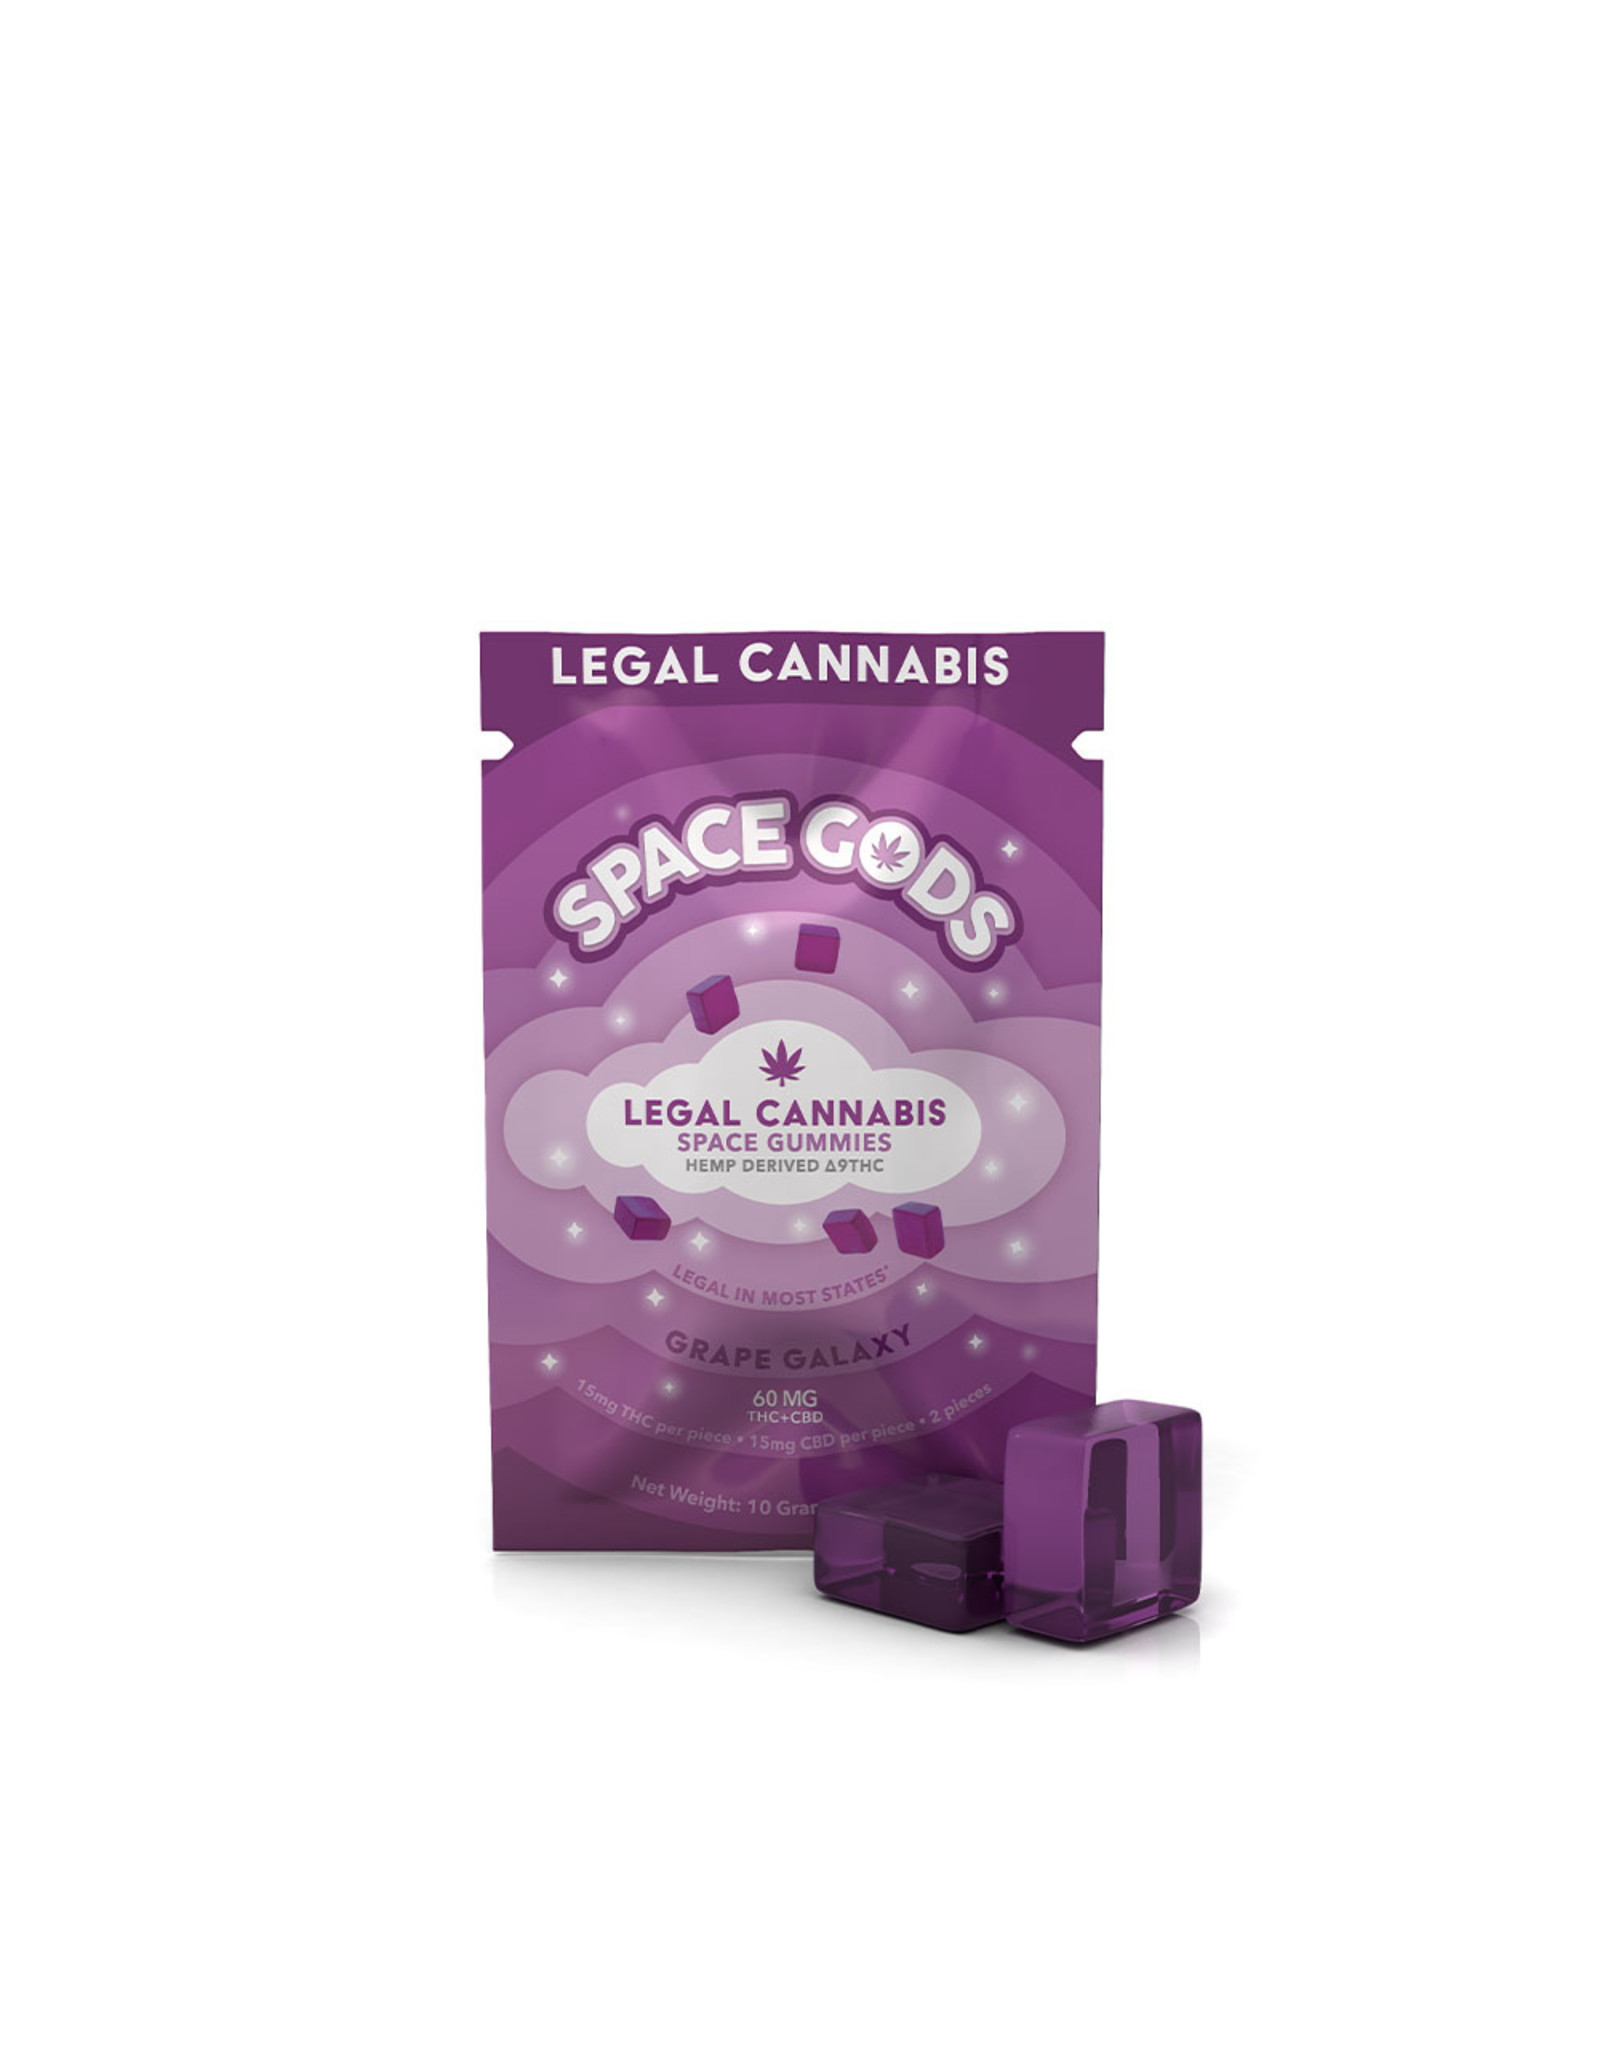 Space Gods Space Gods D9 Gummies 60mg 2pcs Grape Galaxy